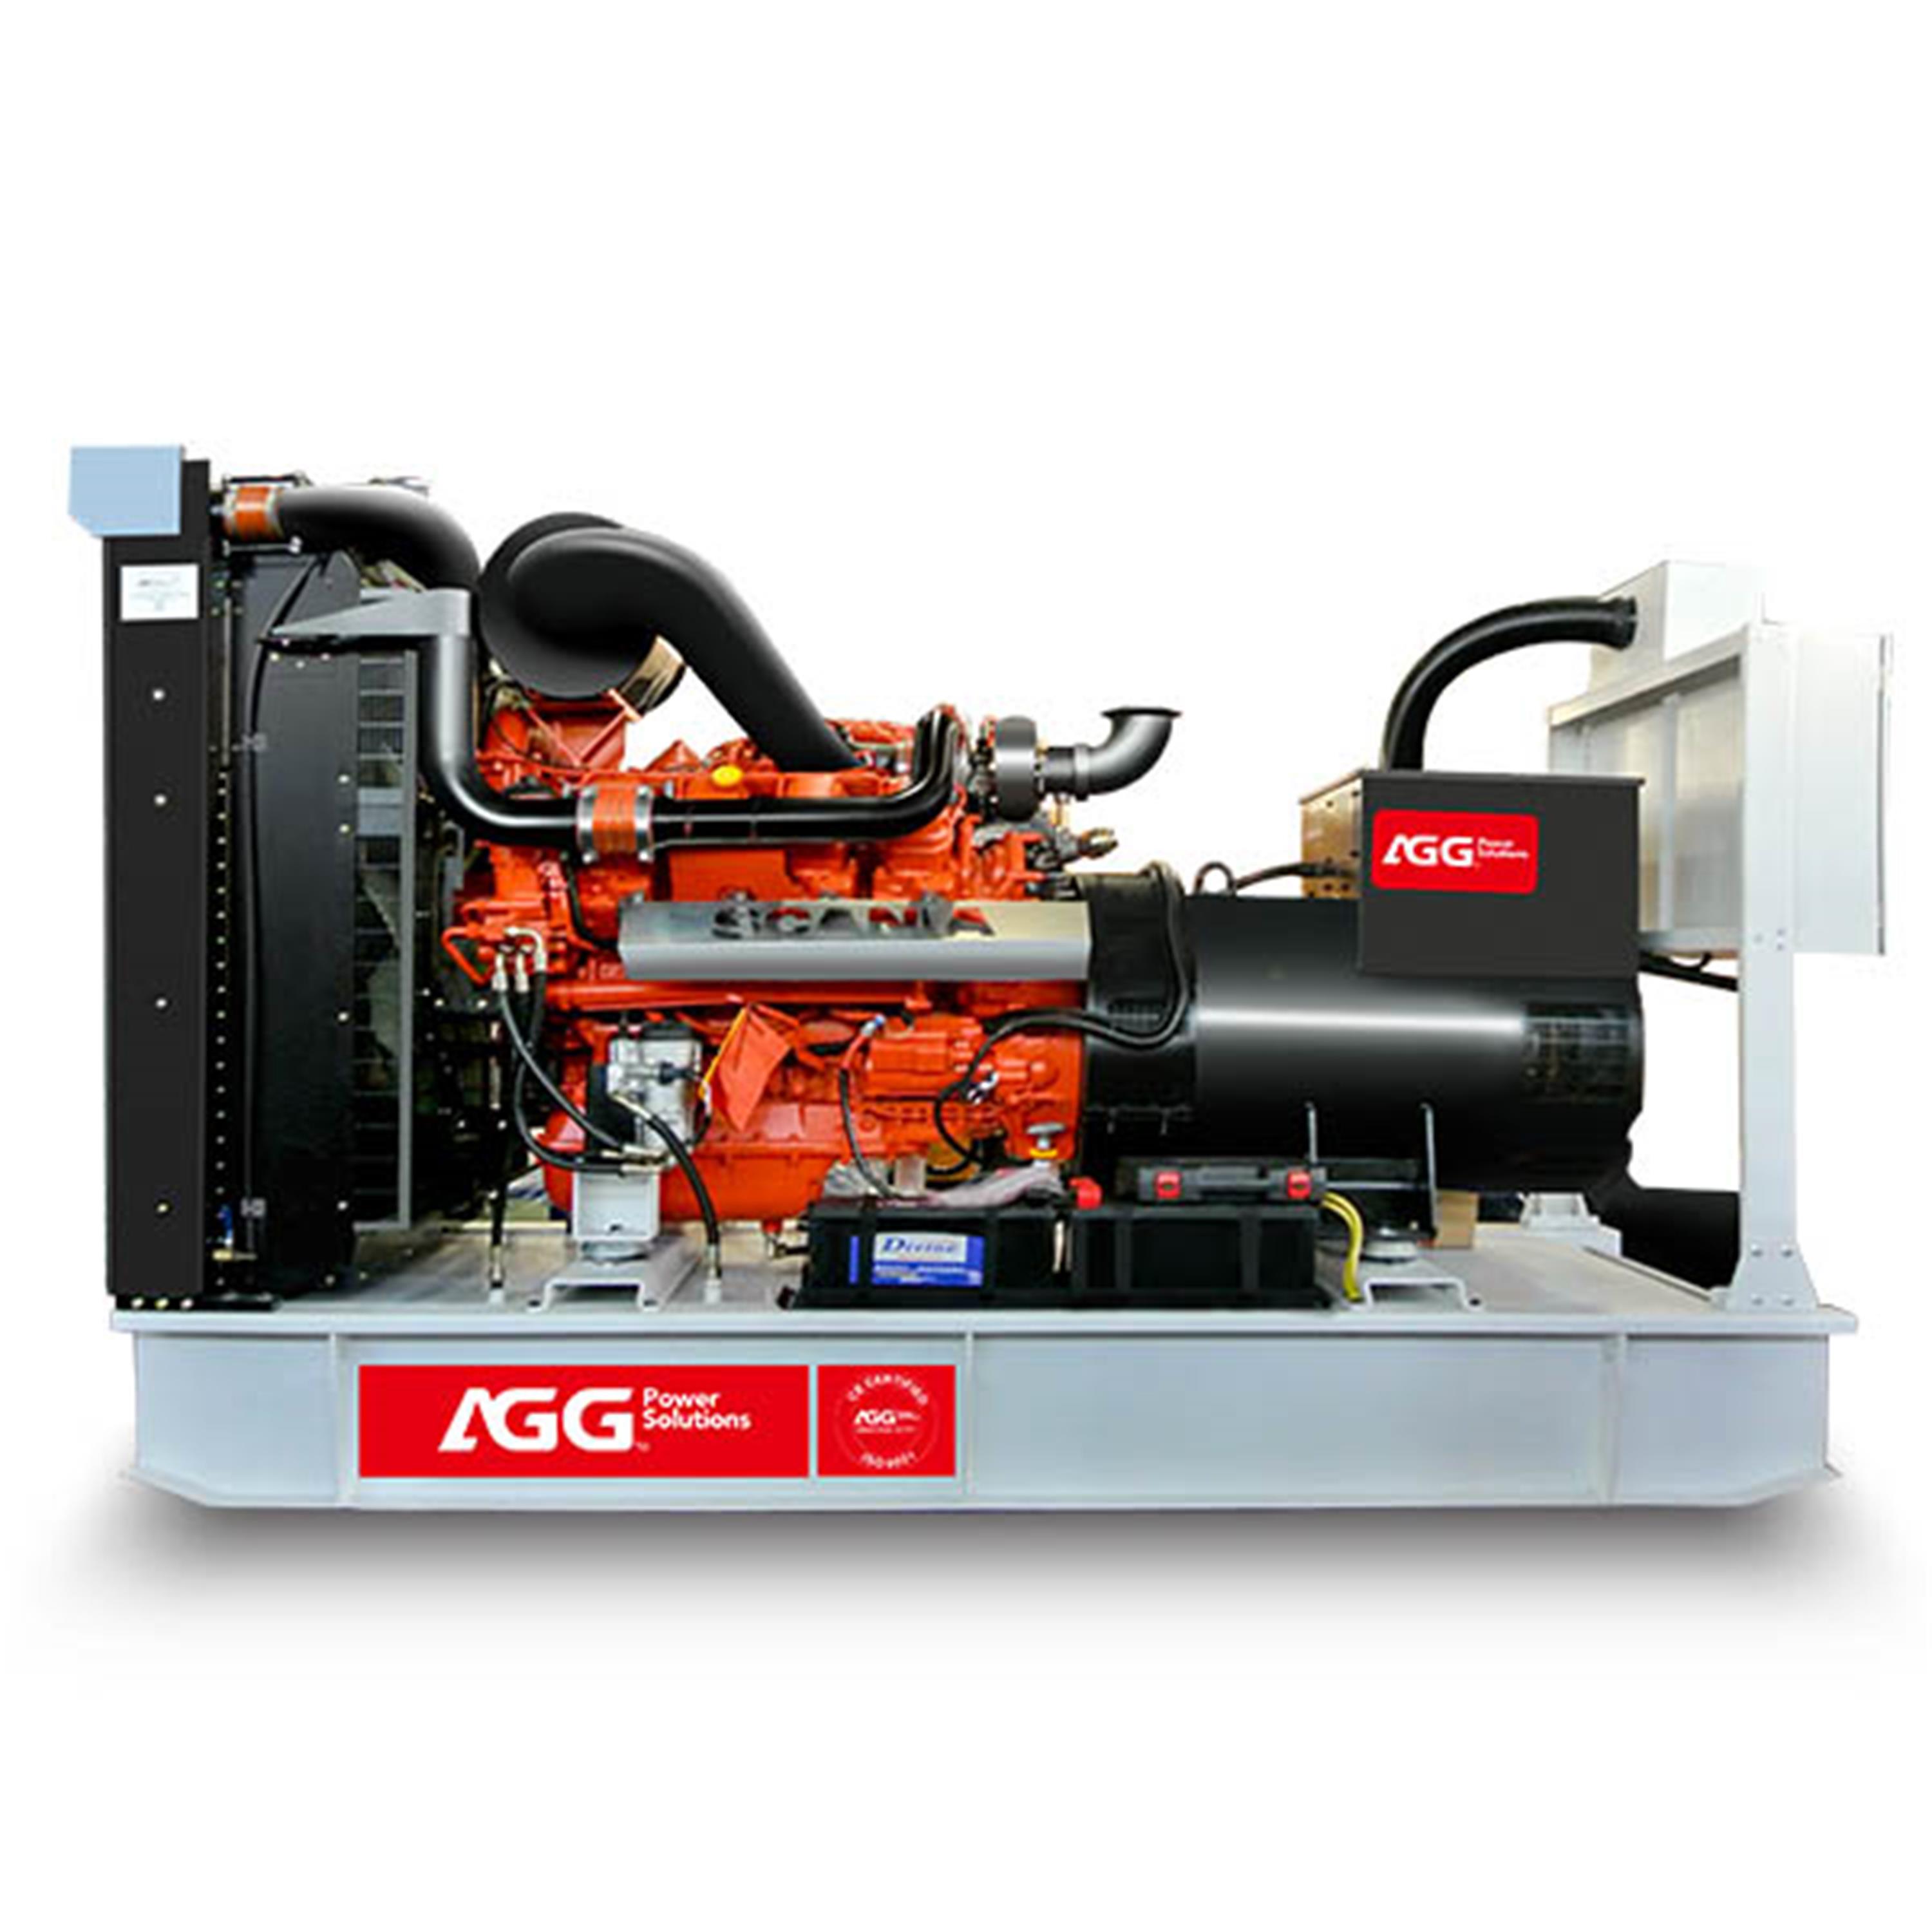 S330E5-50HZ - AGG Power Technology (UK) CO., LTD.